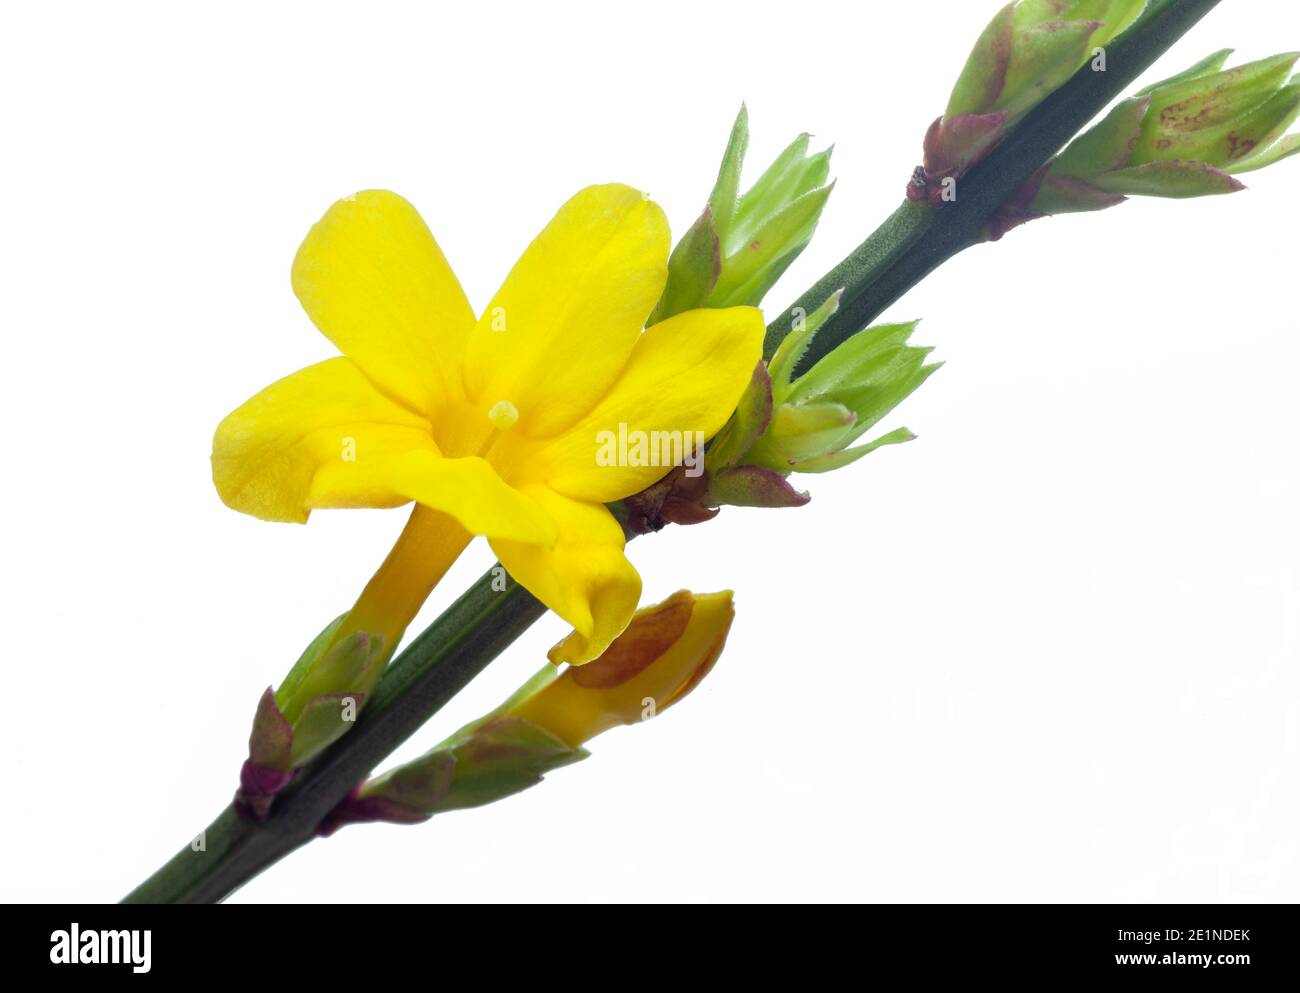 Yellow flowers of winter flowering jasmine (Jasminum nudiflorum) set against a white background Stock Photo